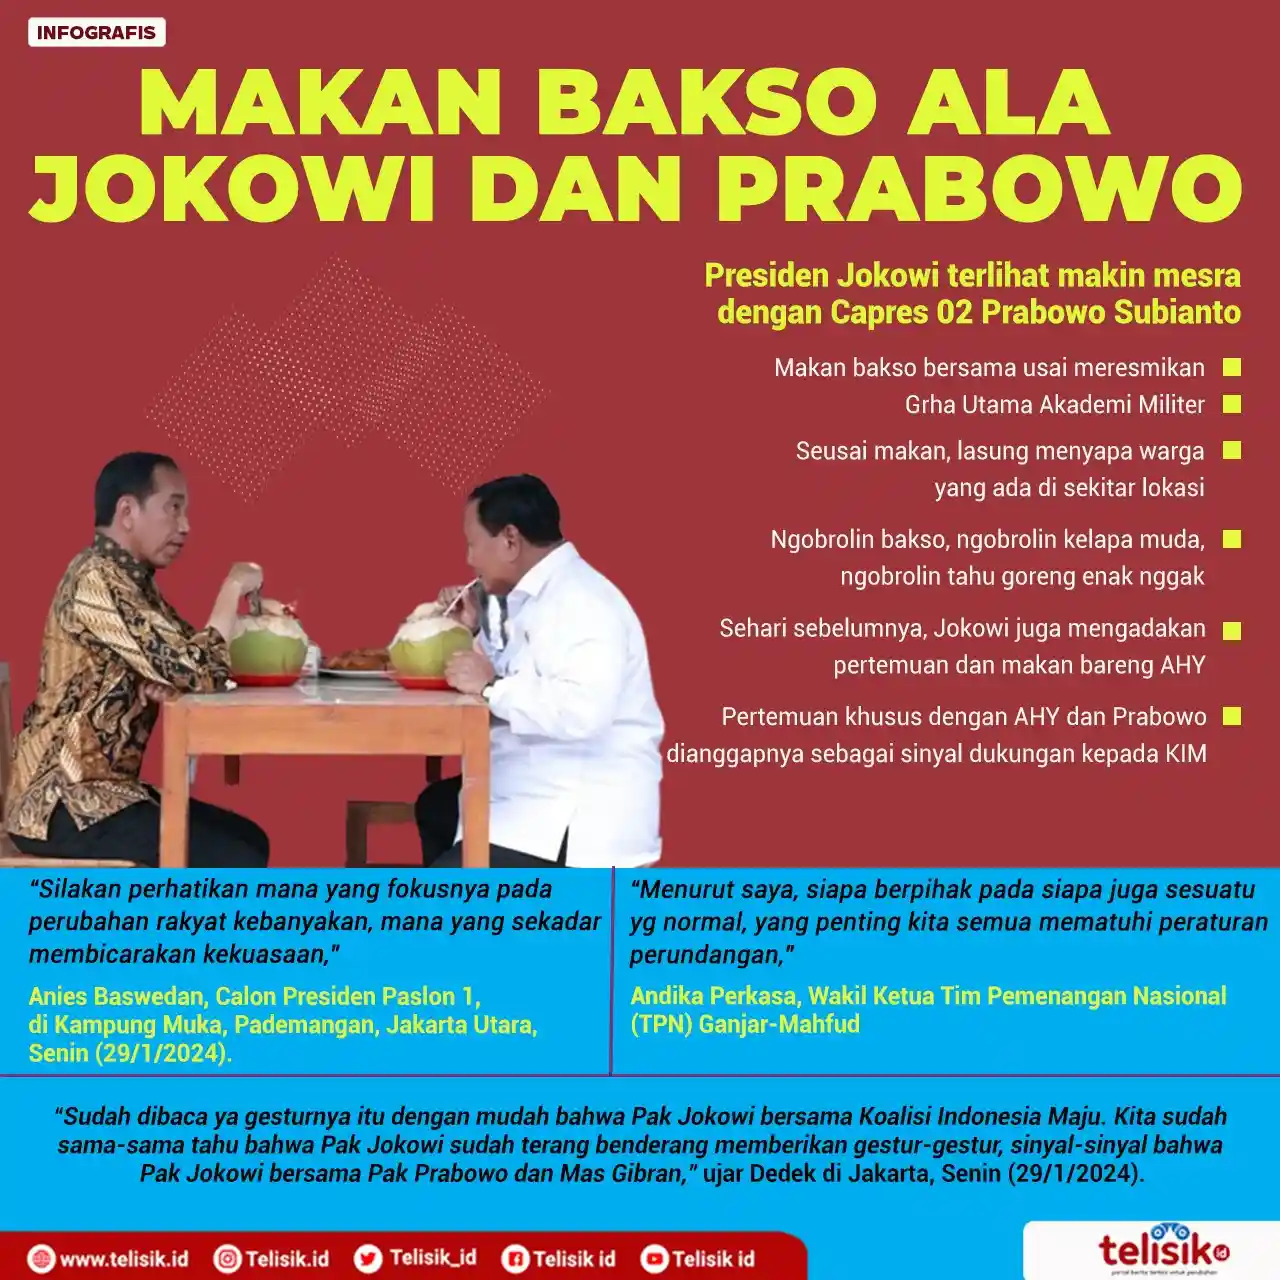 Infografis: Makan Bakso Ala Jokowi dan Prabowo 